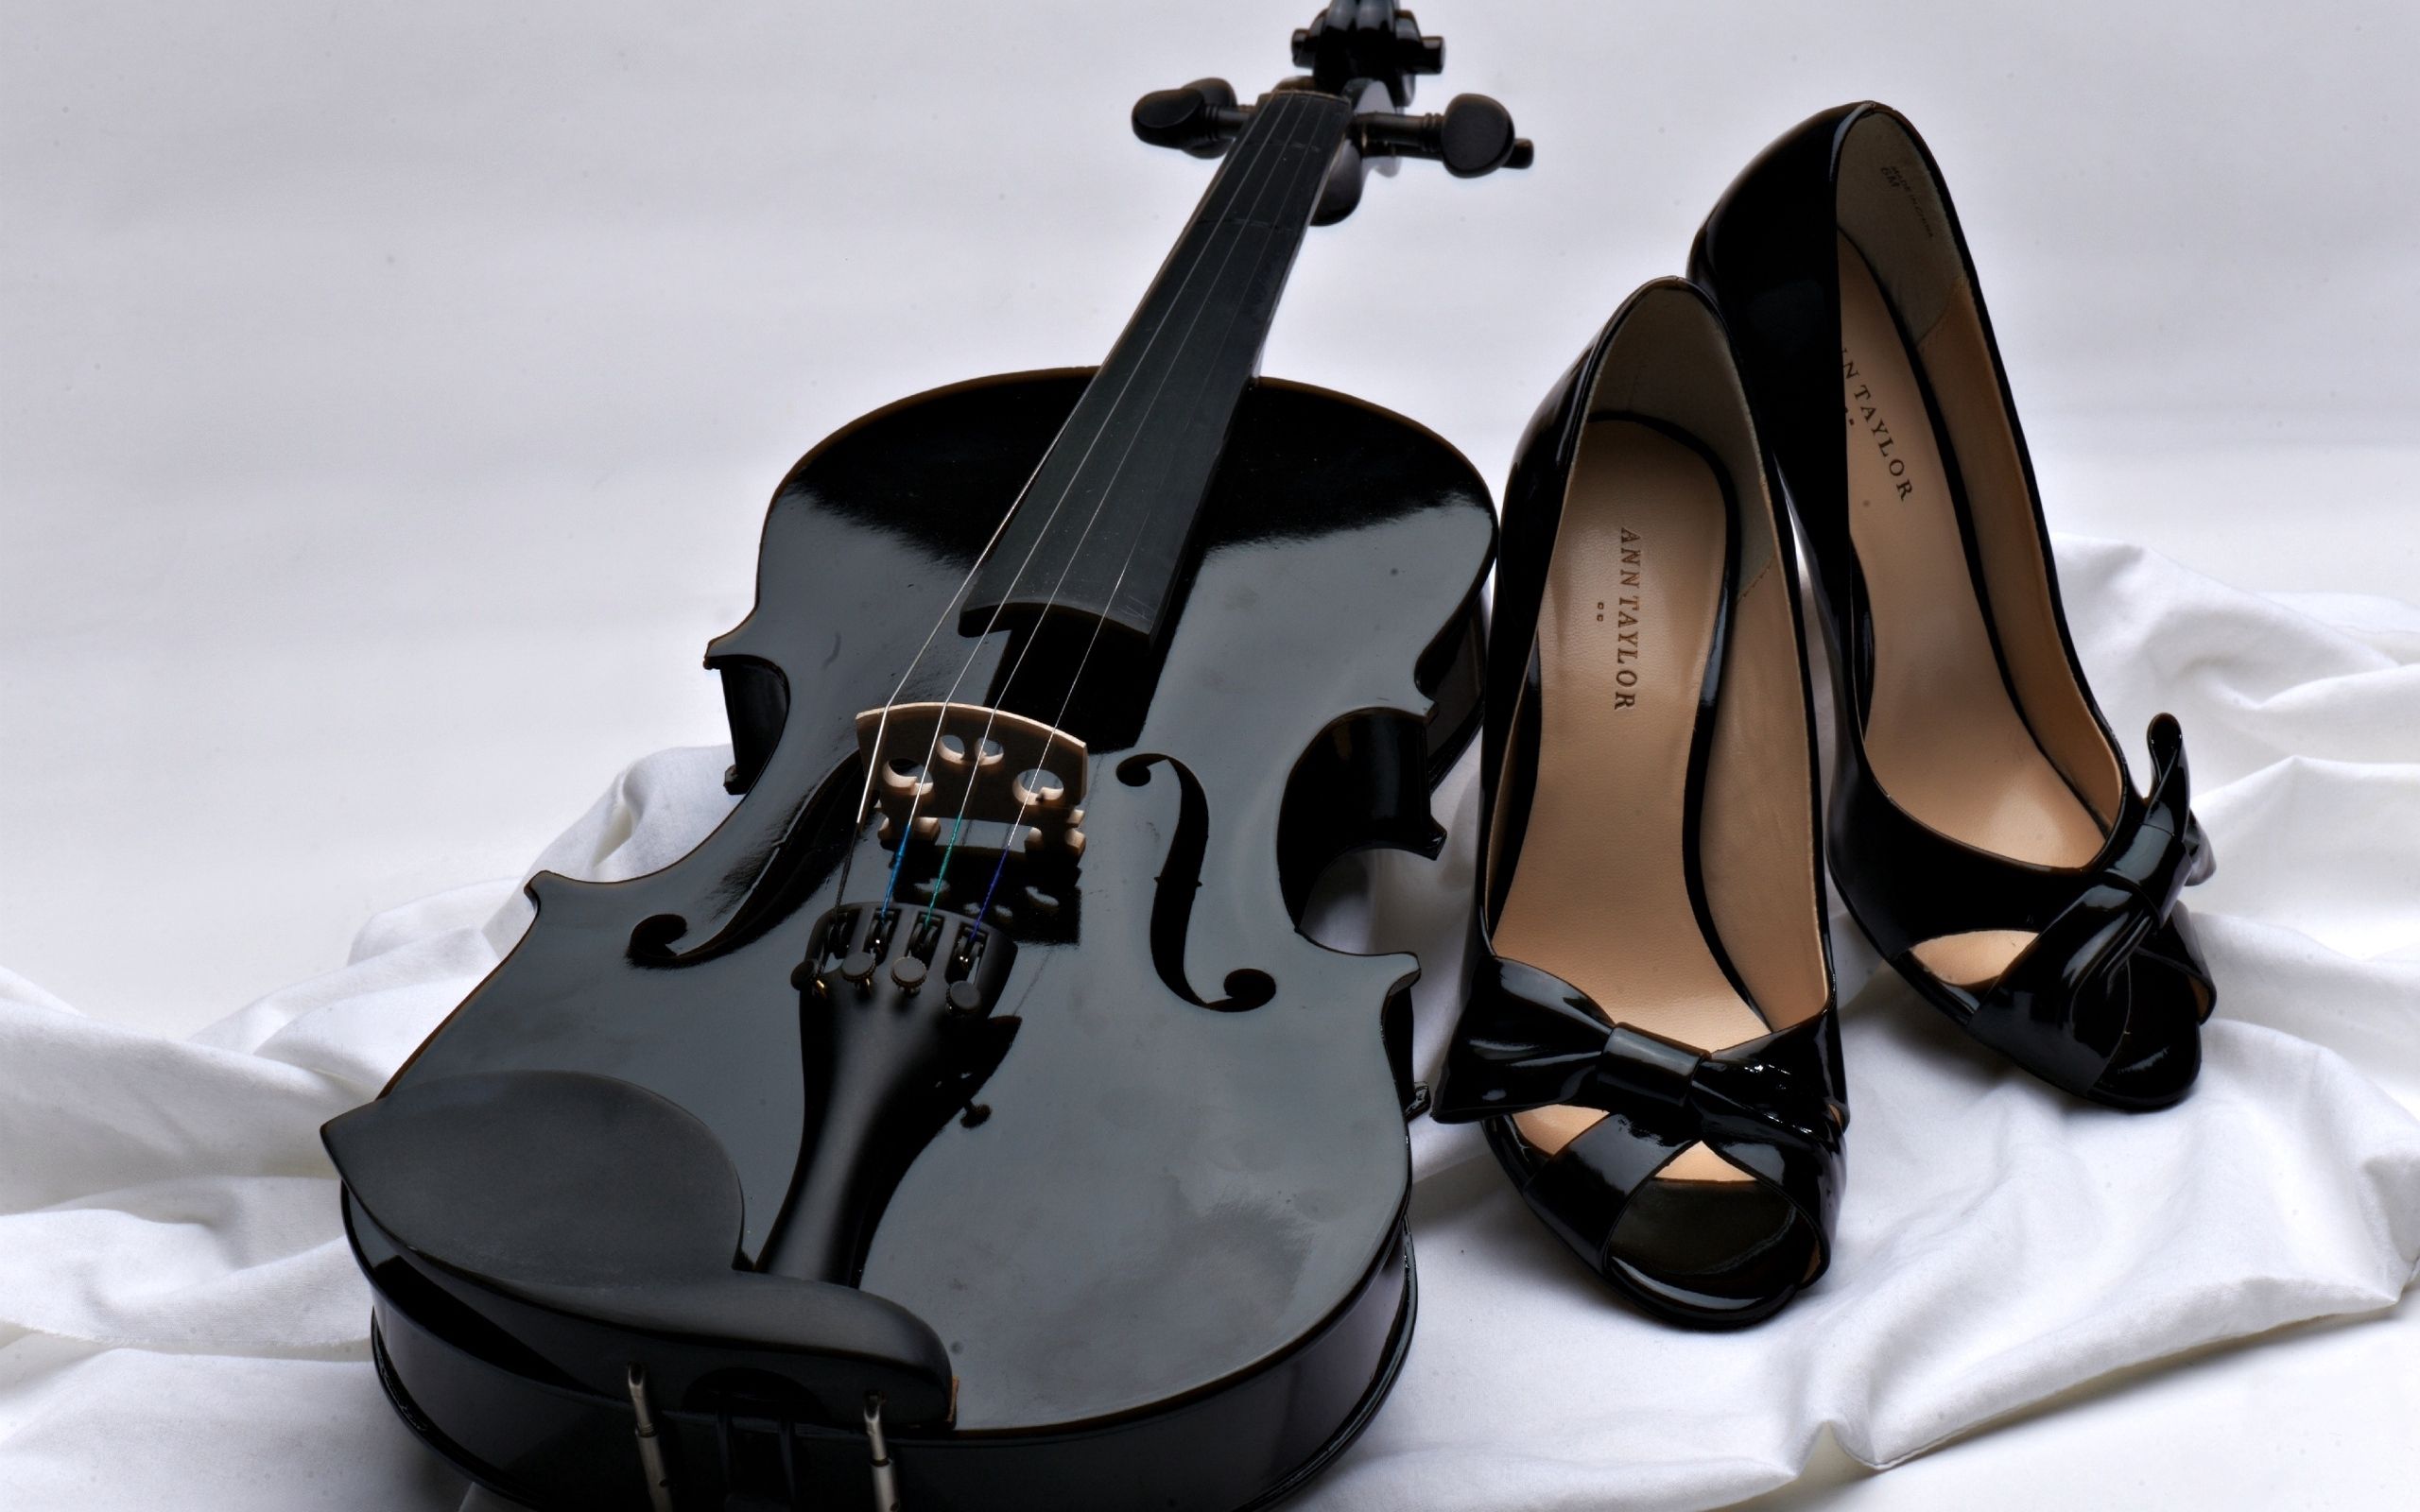 music, miscellanea, miscellaneous, mood, shoes, violin